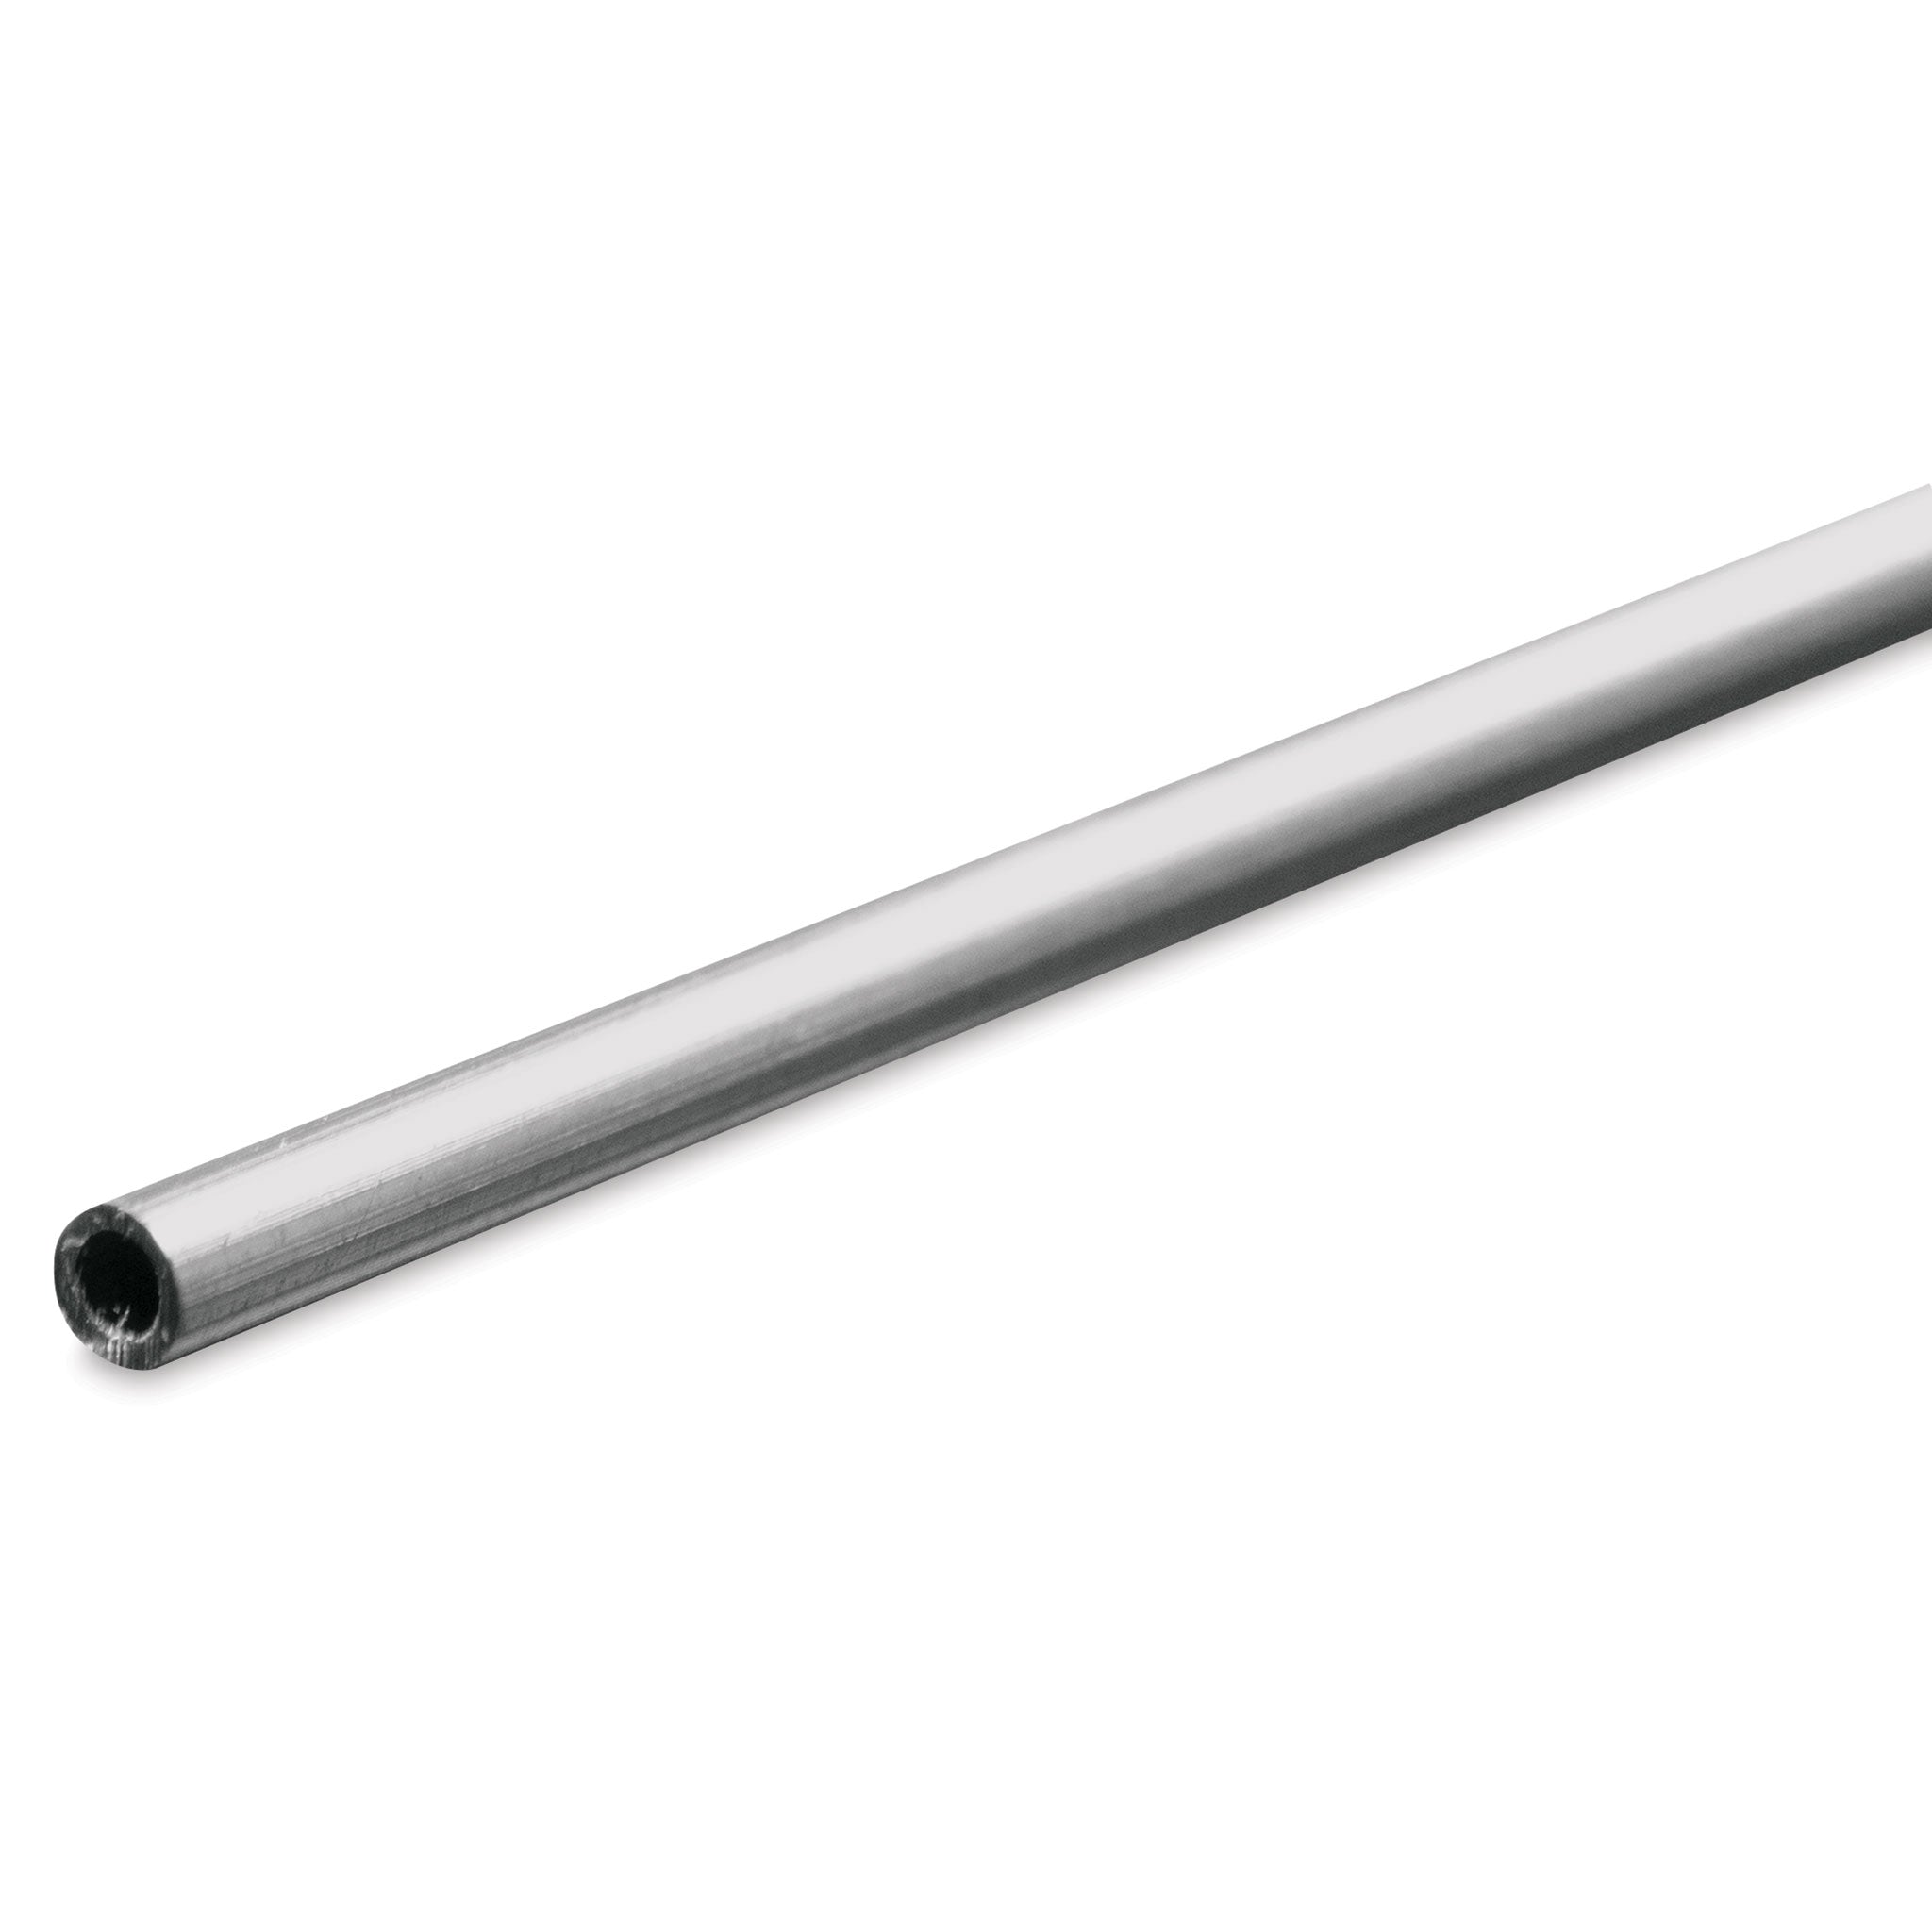 K&S Metals 1108 Round Aluminum Tube 3/32" OD x 0.014" Wall x 36" Long (1 Piece)